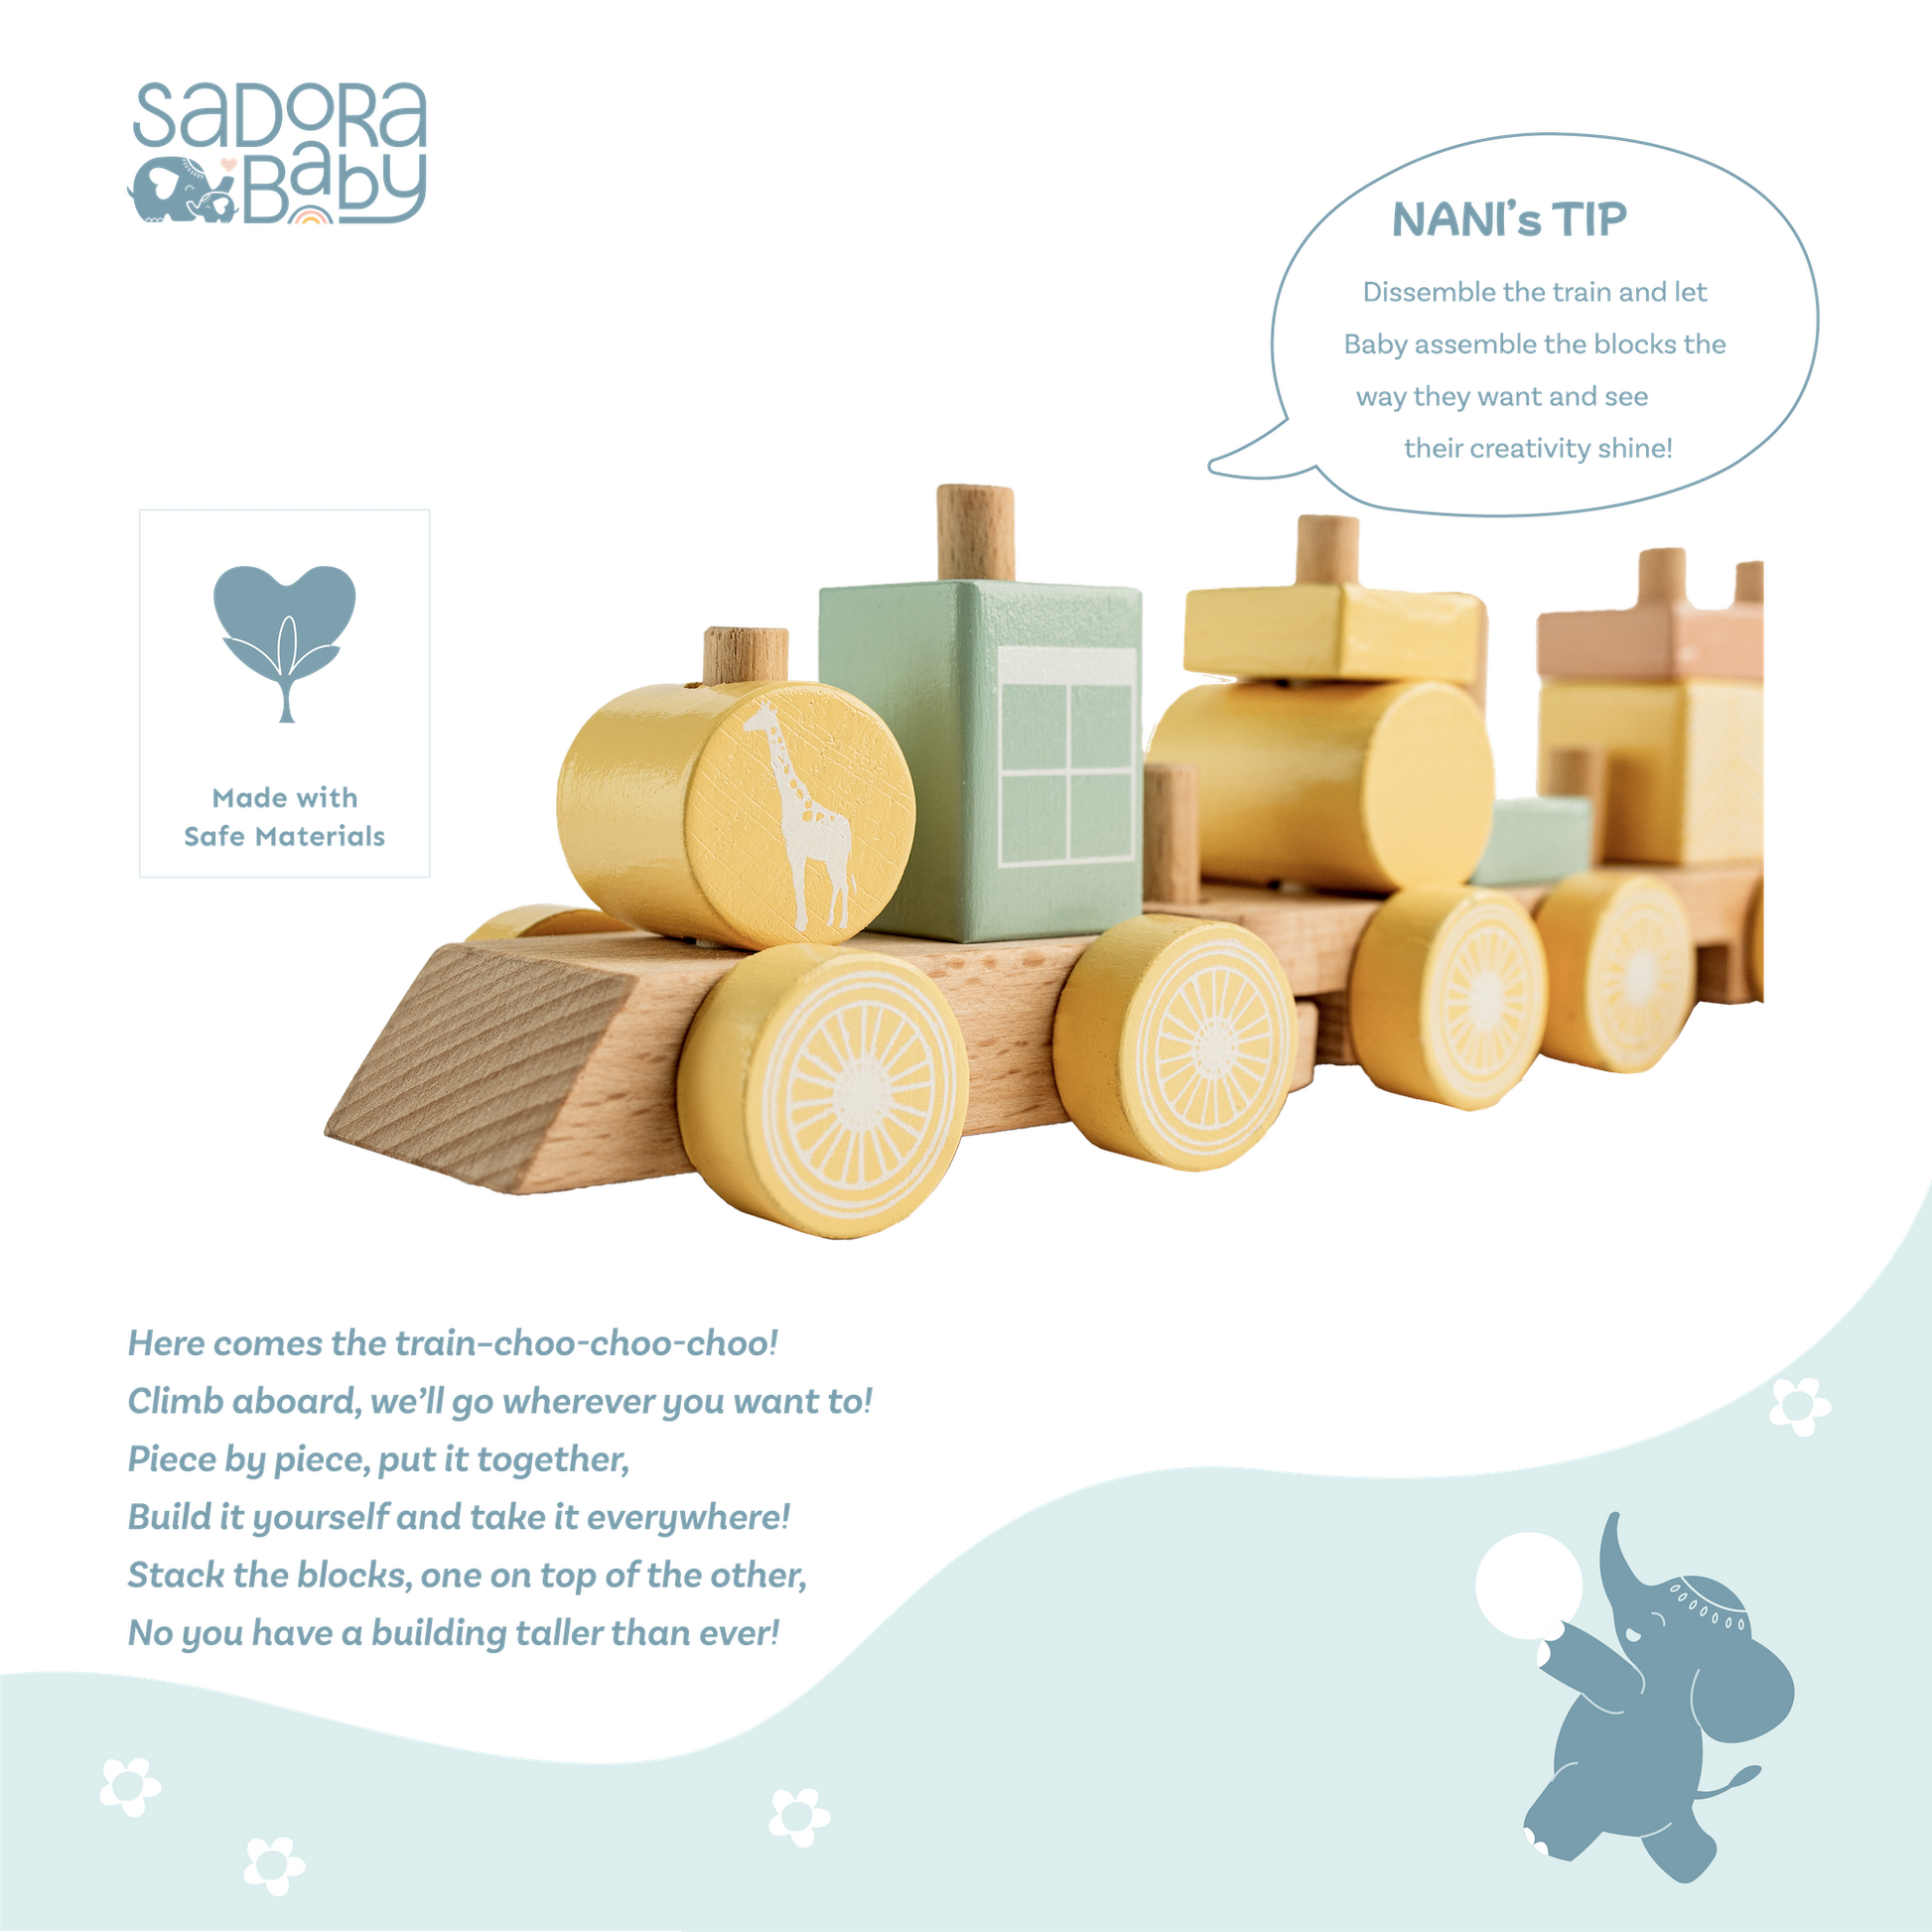 Buy Multi Play Use Wooden Choo-Choo Train Set Online - SkilloToys.com